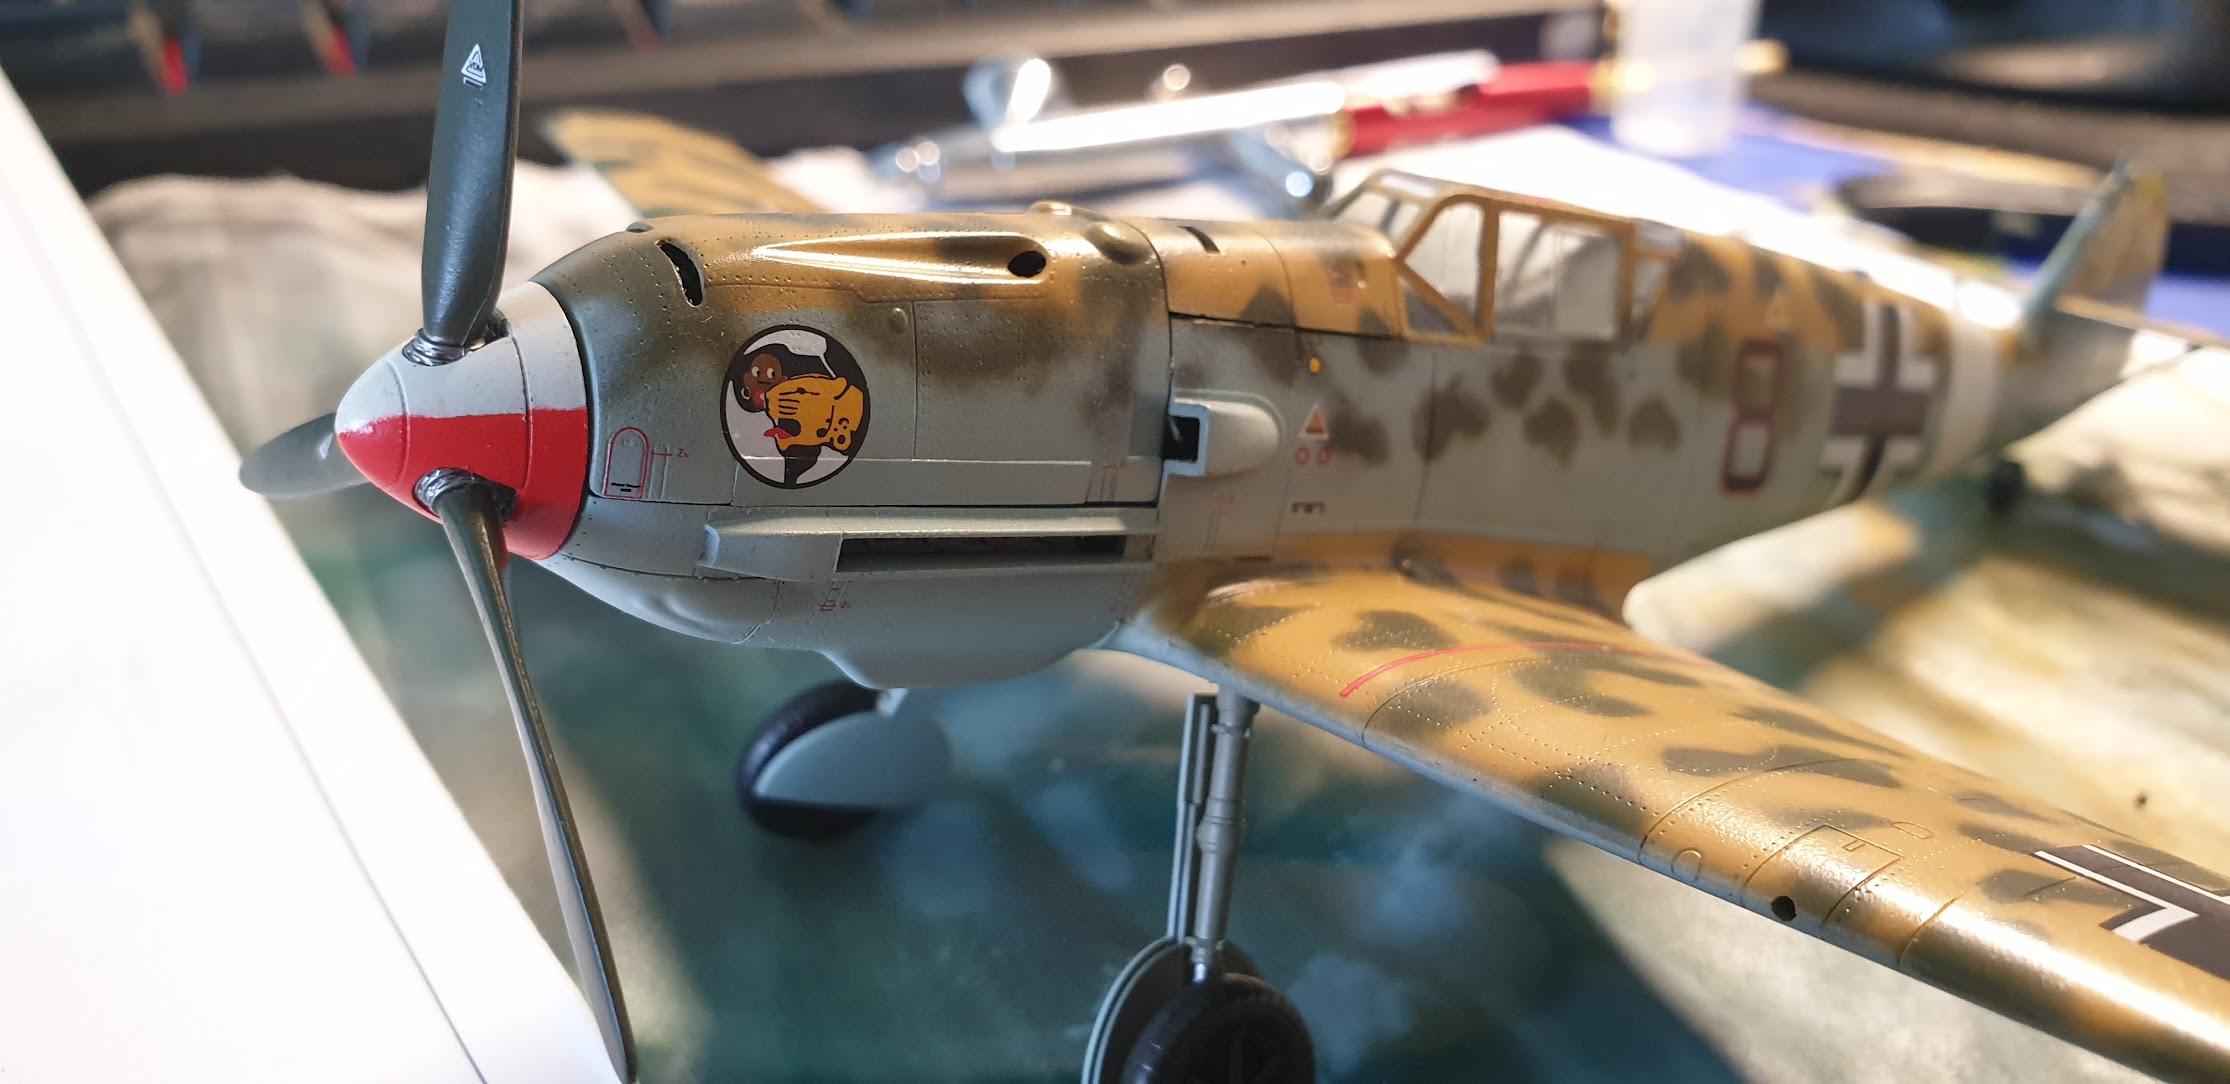 Messerschmitt Bf 109 E7 Trop Eduard 1/48 AL9nZEWxF9KYDImrHrO4vOEu7lHRFiC7AgBWlf4-sInMYQjYb3B7v7f3J3xGih9jTrWIsyKBMW1iv-KLfKMZG4yIkBJ3FMSPoJHJ71QVGGAe8jNZGoxmoeWcwEfw3hHwDq_noK6IrRAsyUN0dvF4AZDOaGB-=w2230-h1084-no